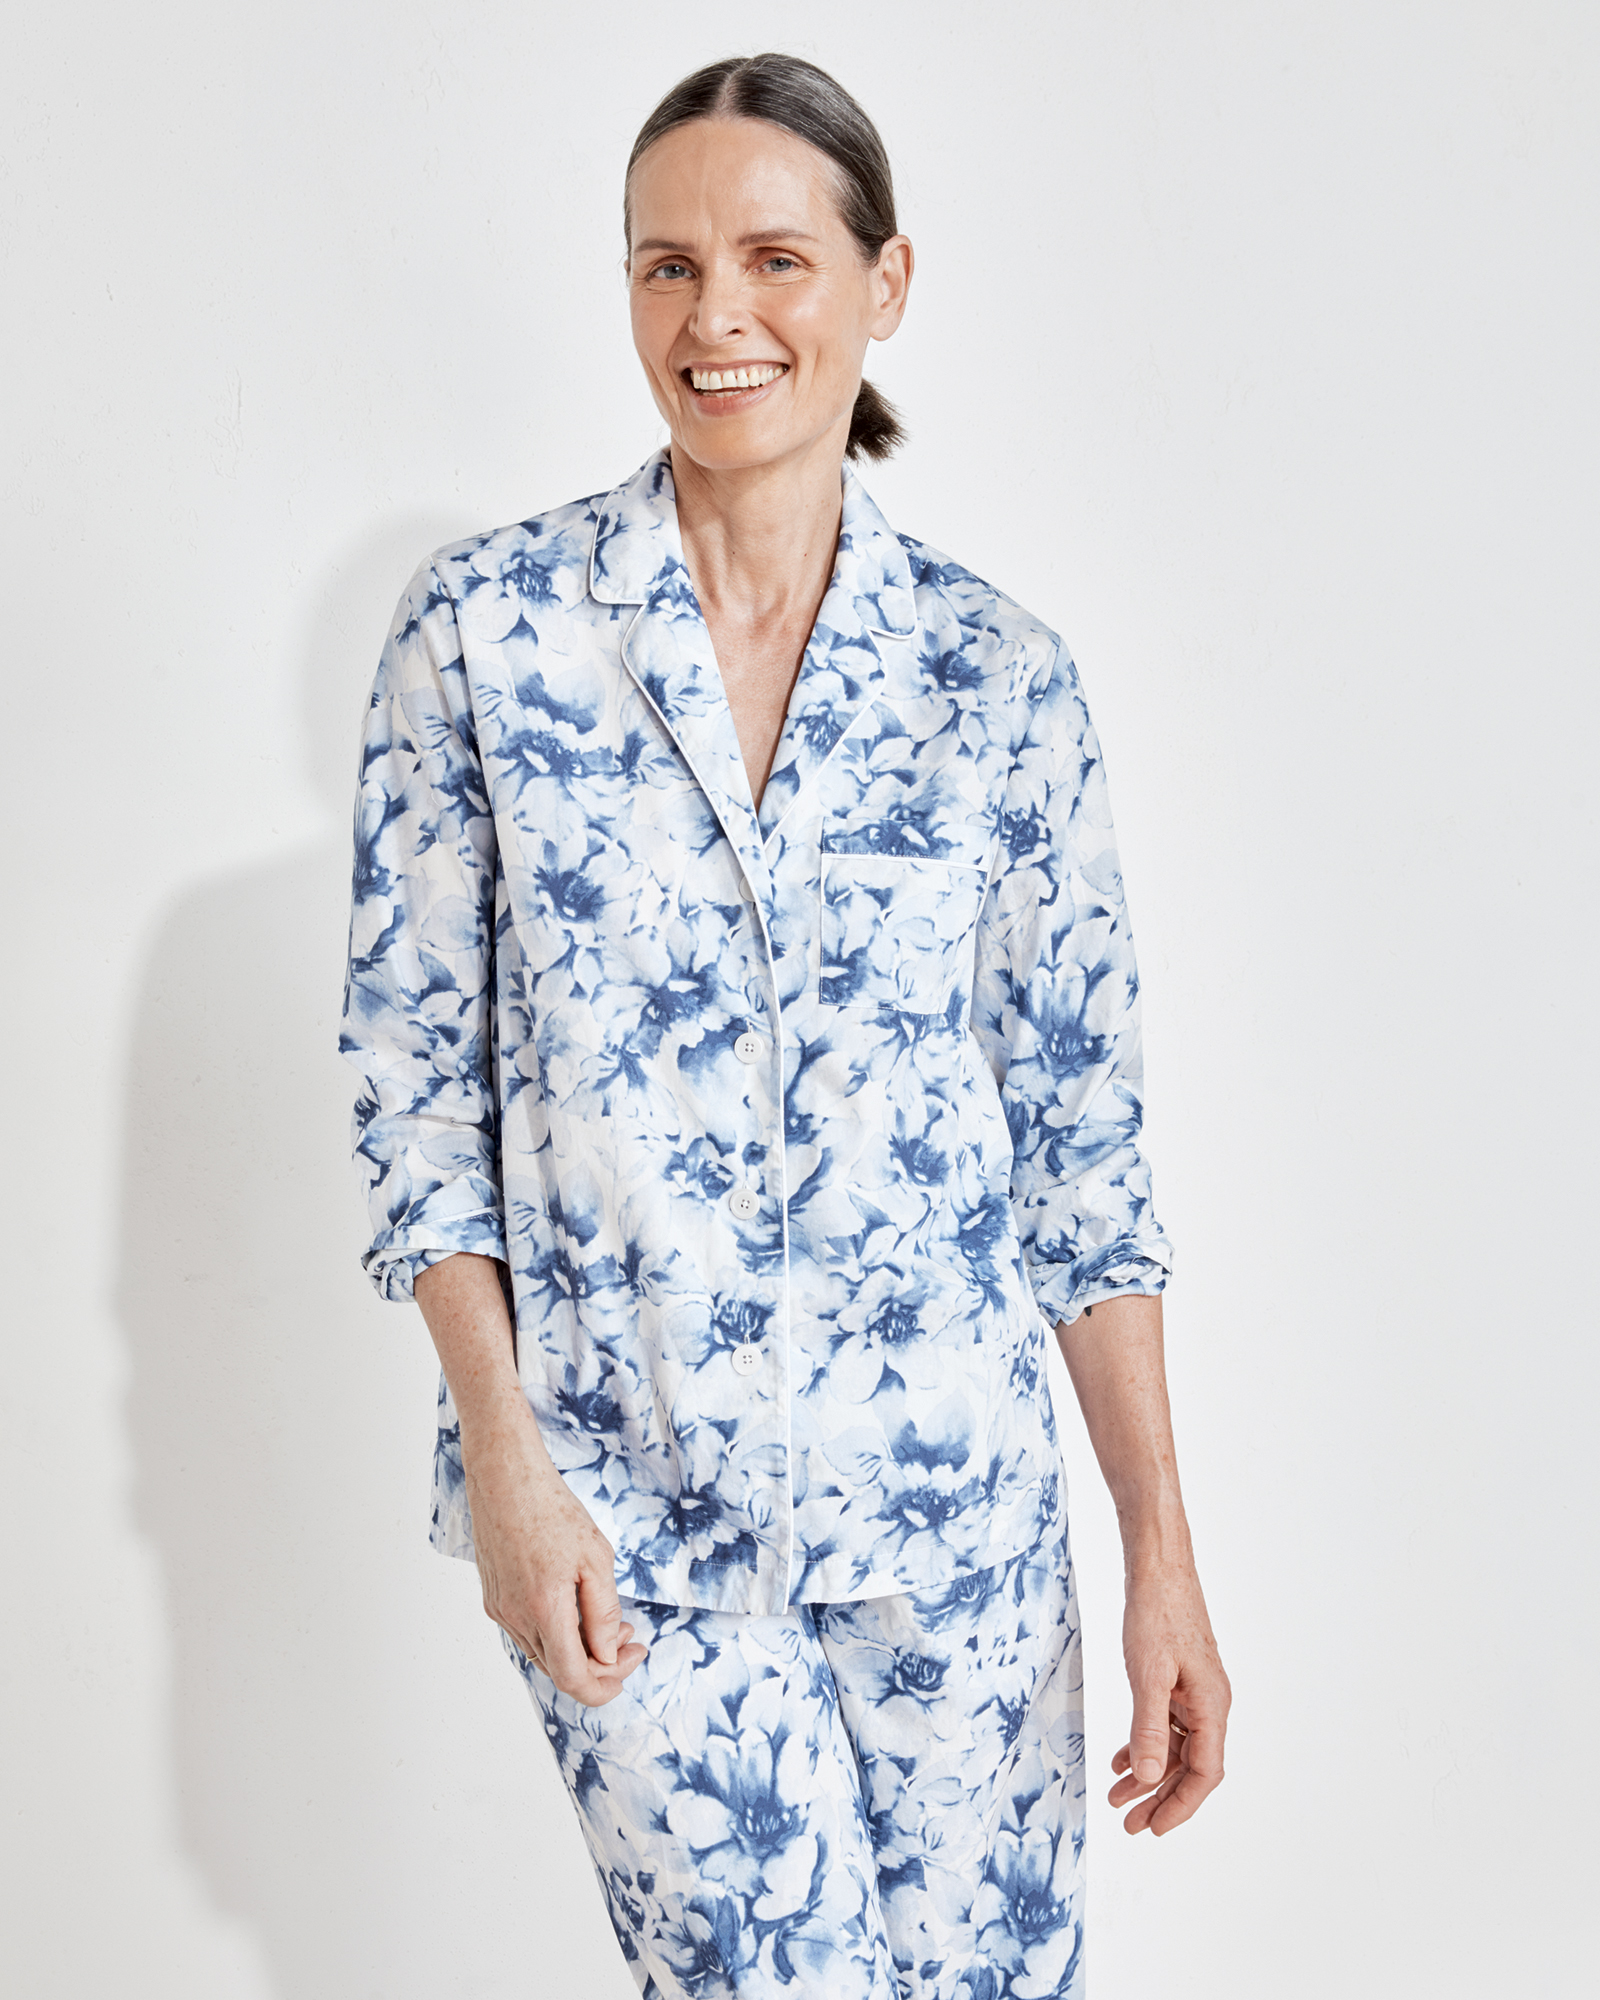 Talbots Organic True Cotton Blurred Floral Pajama Shirt - Delft Blue - Small